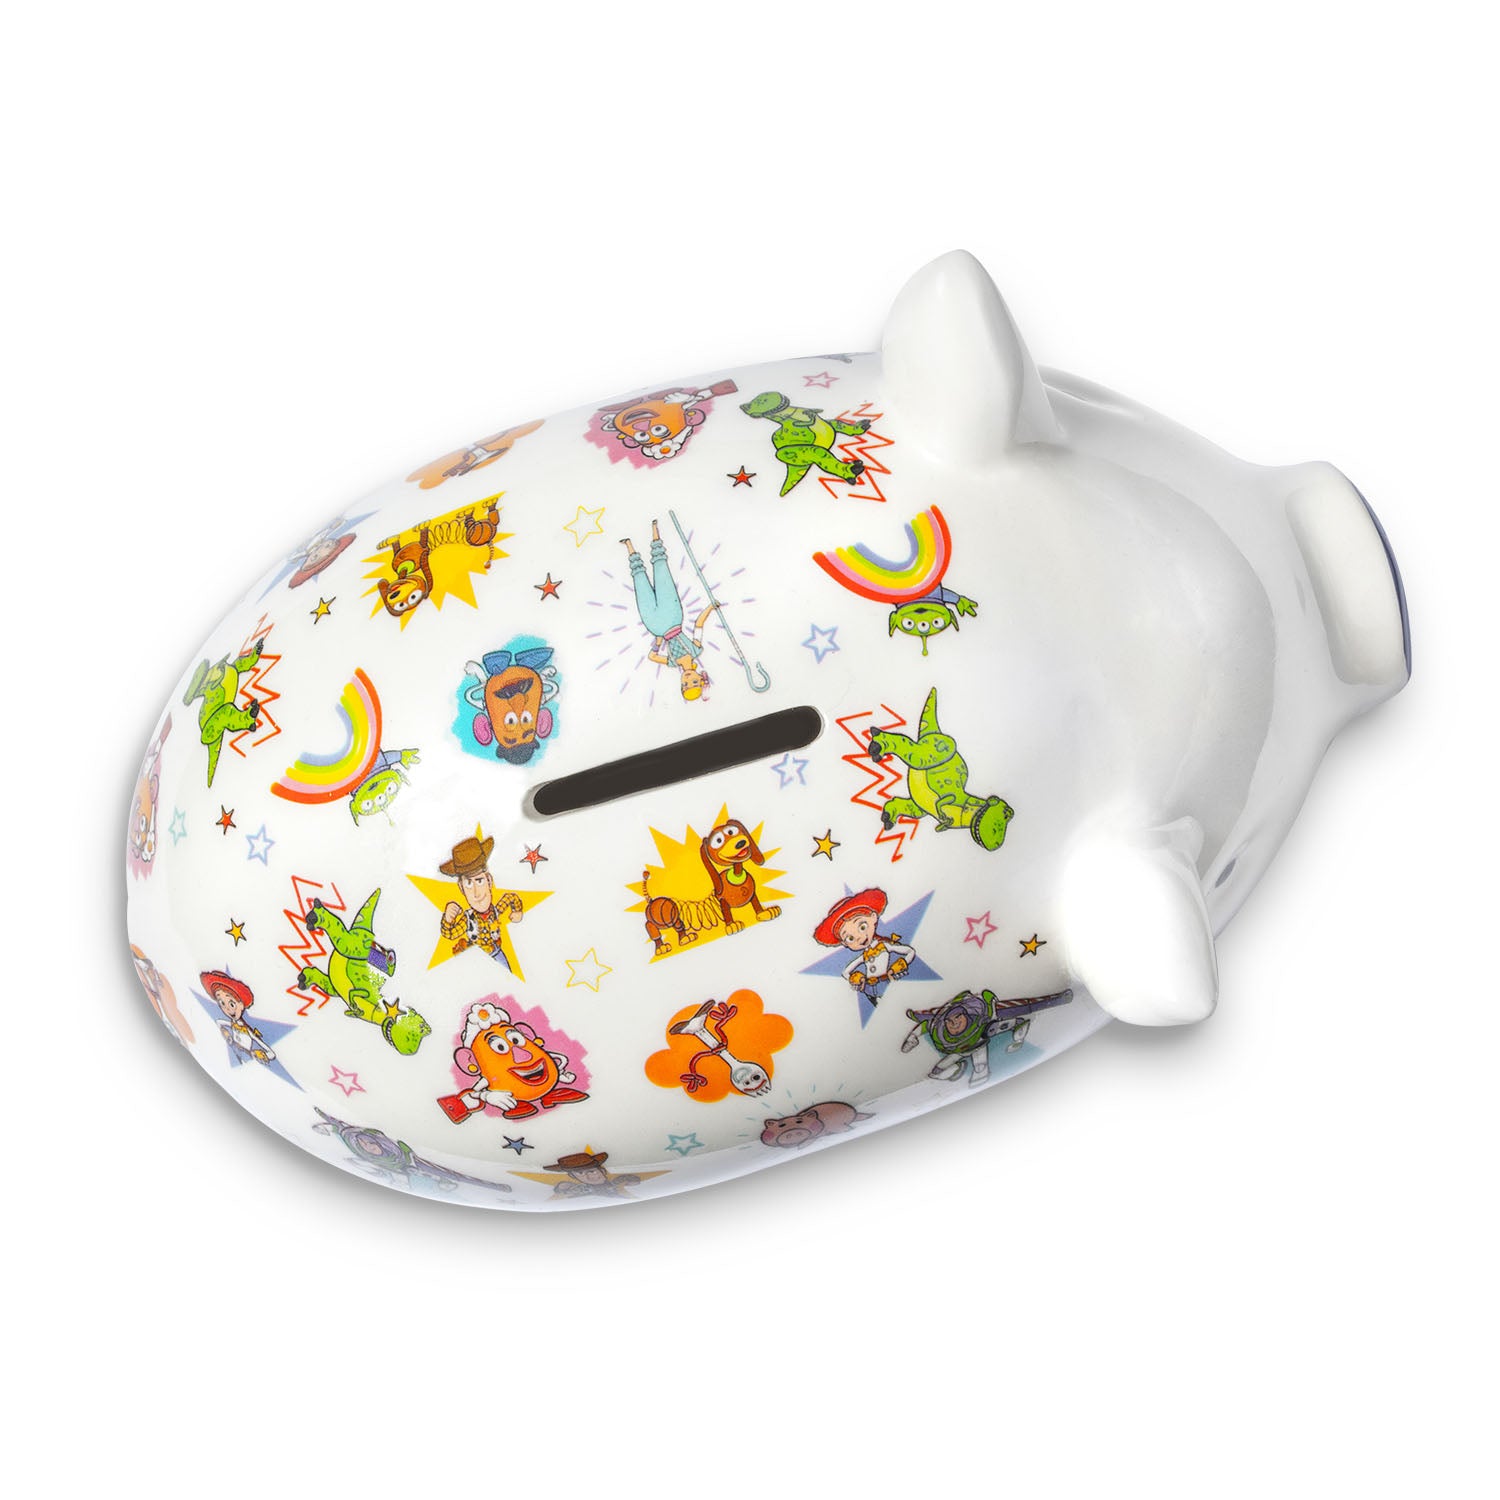 Tilly Pig - Toy Story  Piggy Bank